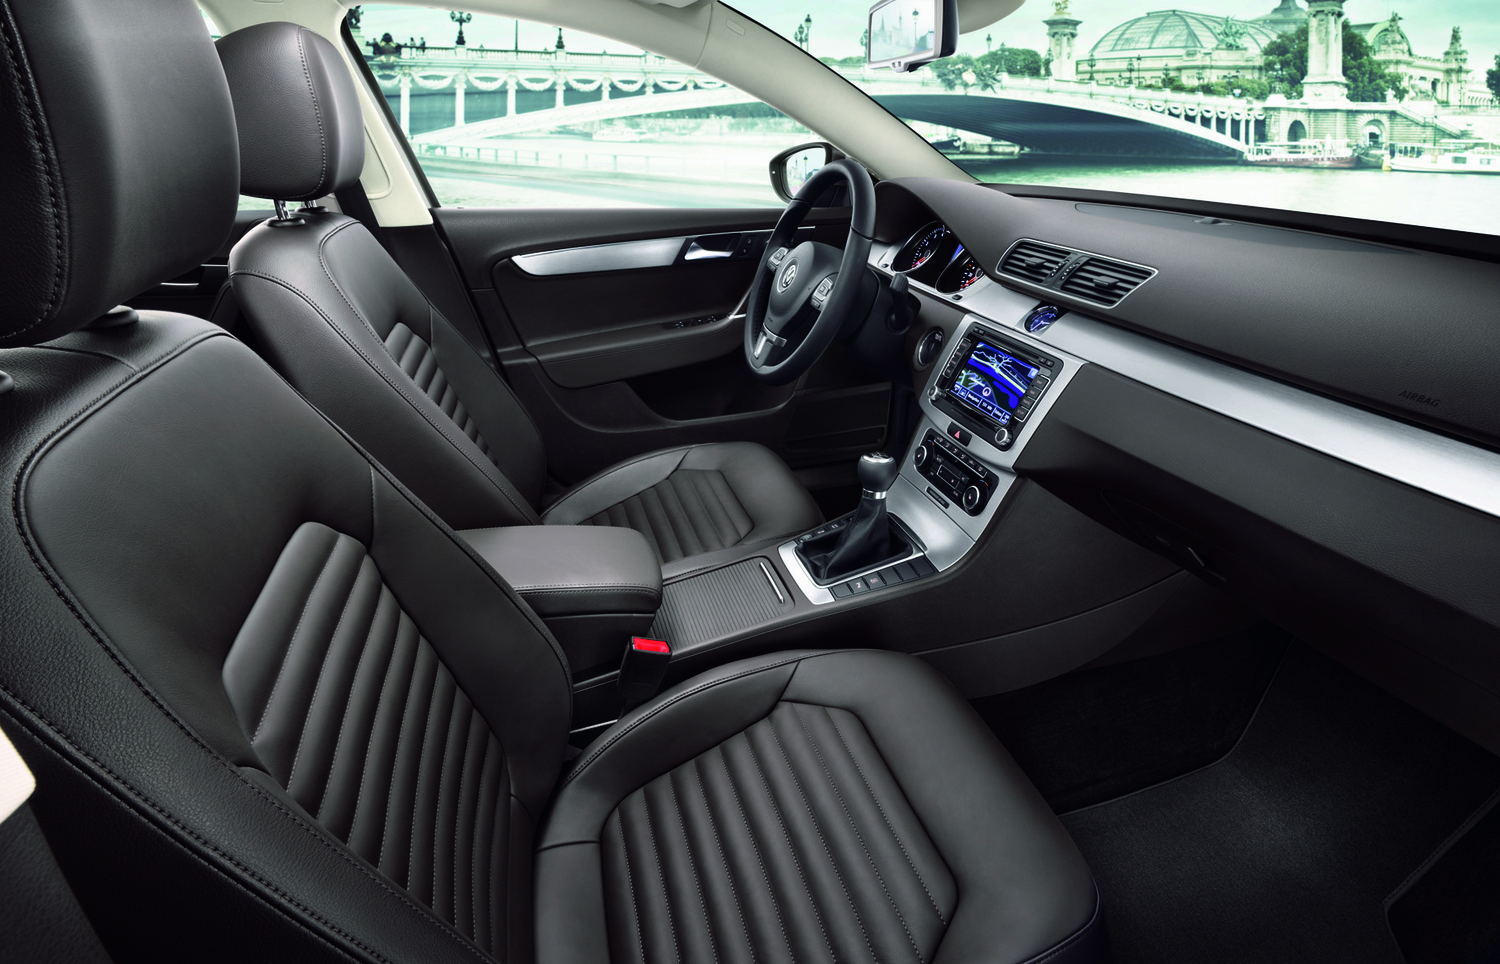 седан Volkswagen Passat 2011 - 2015г выпуска модификация 1.4 AMT (160 л.с.)